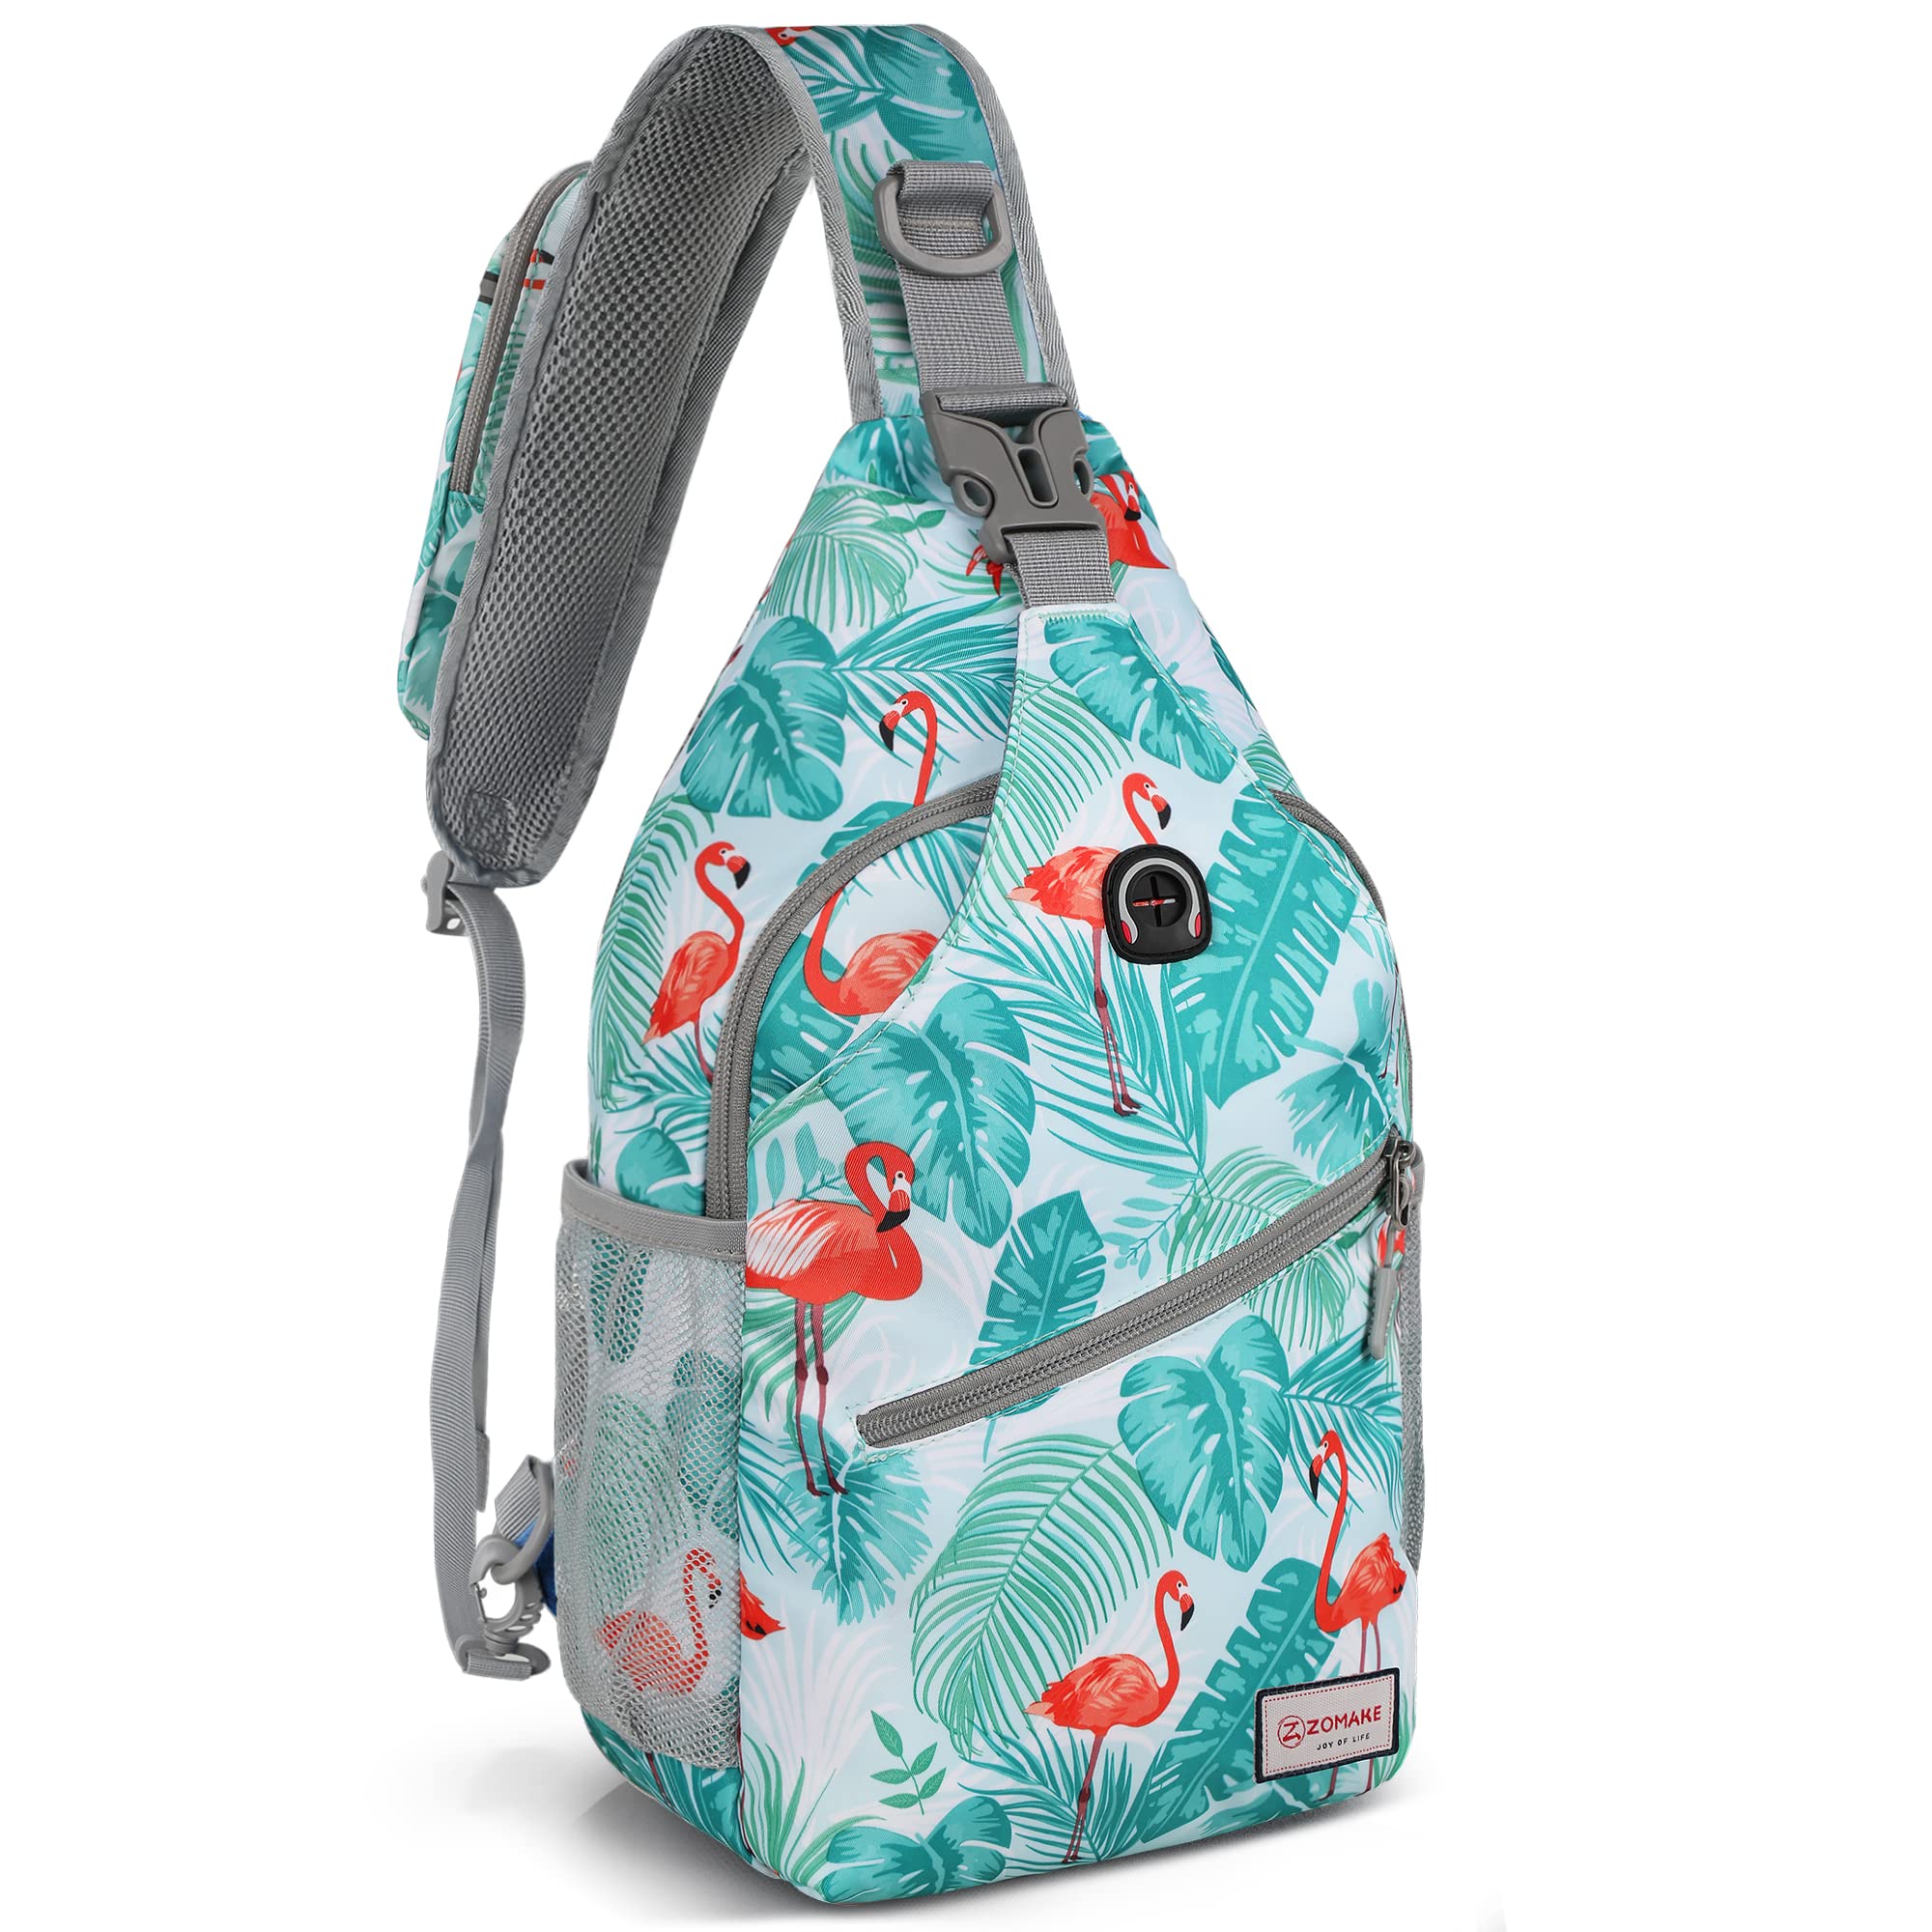 ZOMAKE Sling Bag for Women Men:Small Crossbody Sling Backpack - Water Resistant Mini Shoulder Bag Chest Bag for Travel